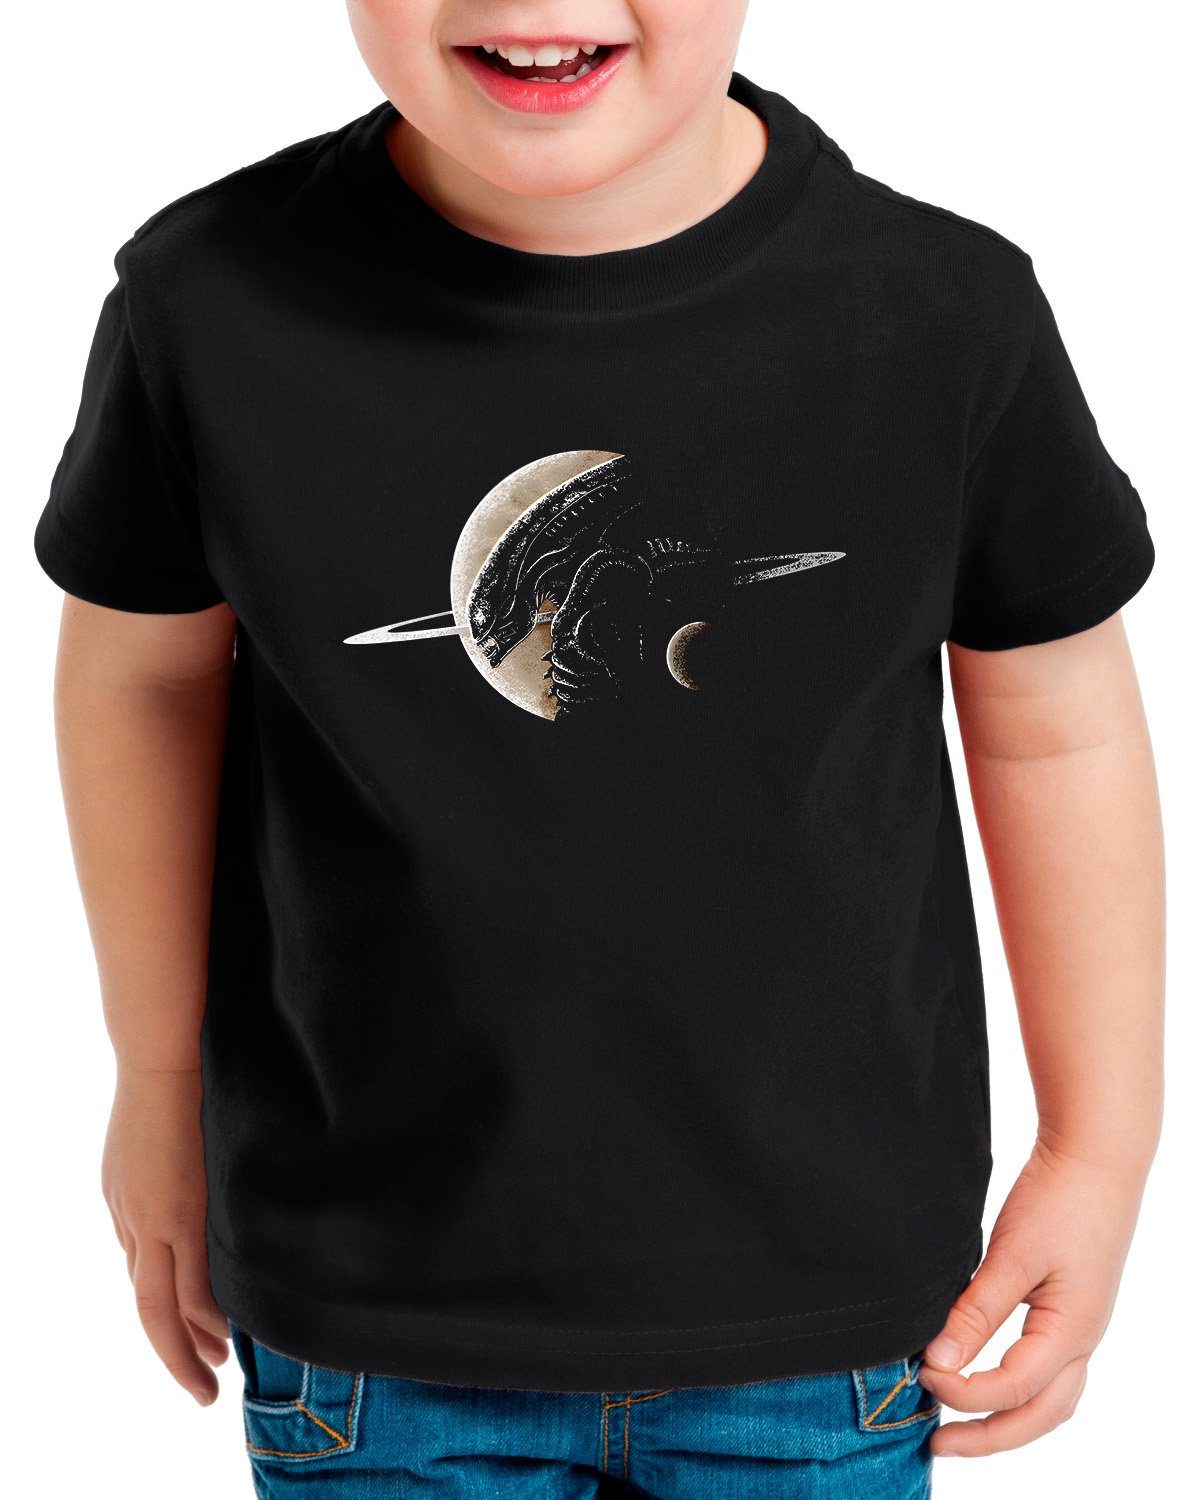 style3 Print-Shirt Kinder T-Shirt Xenomorph Planet xenomorph alien ridley scott predator